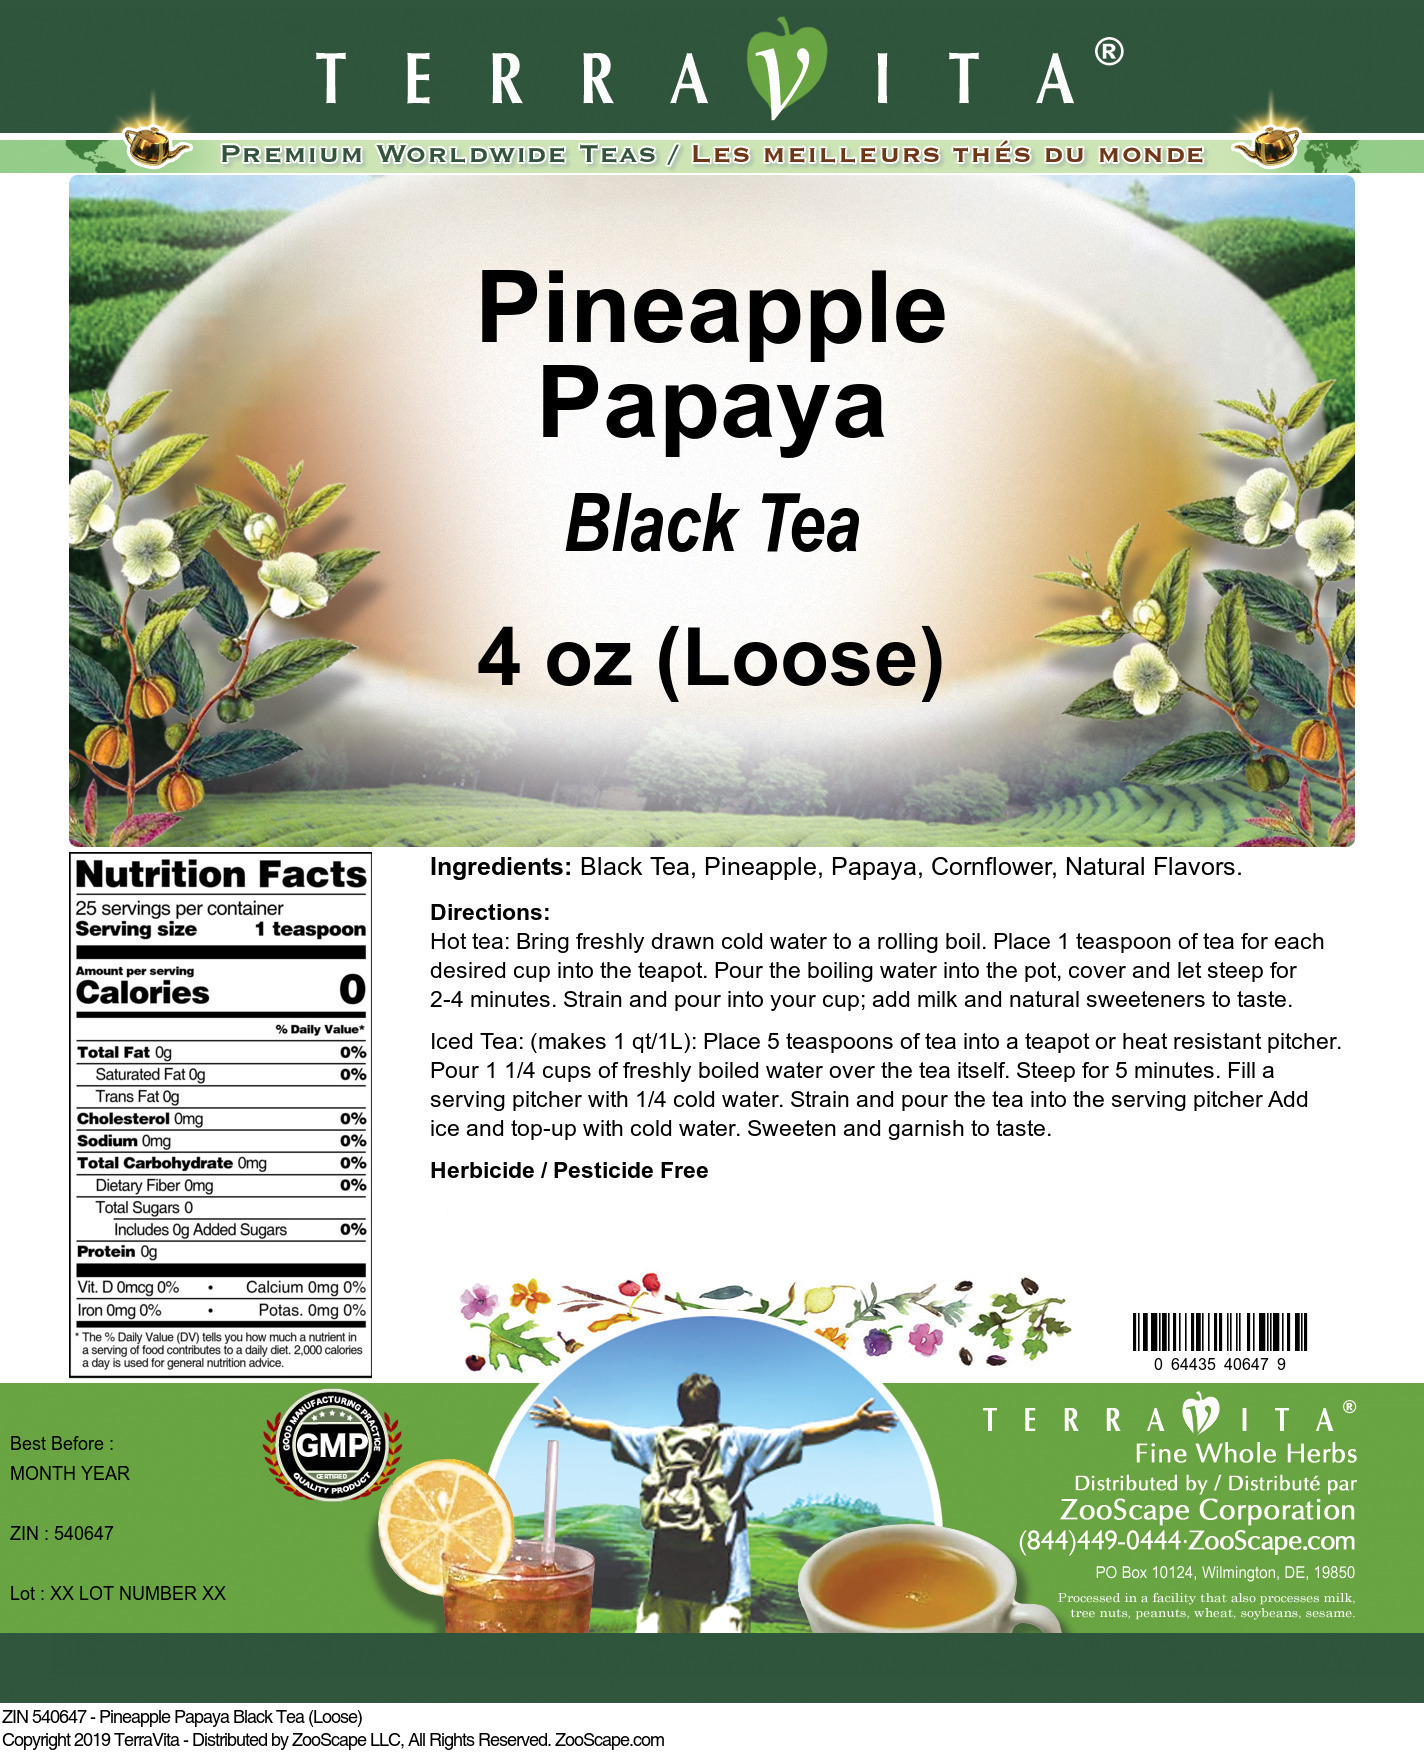 Pineapple Papaya Black Tea (Loose) - Label